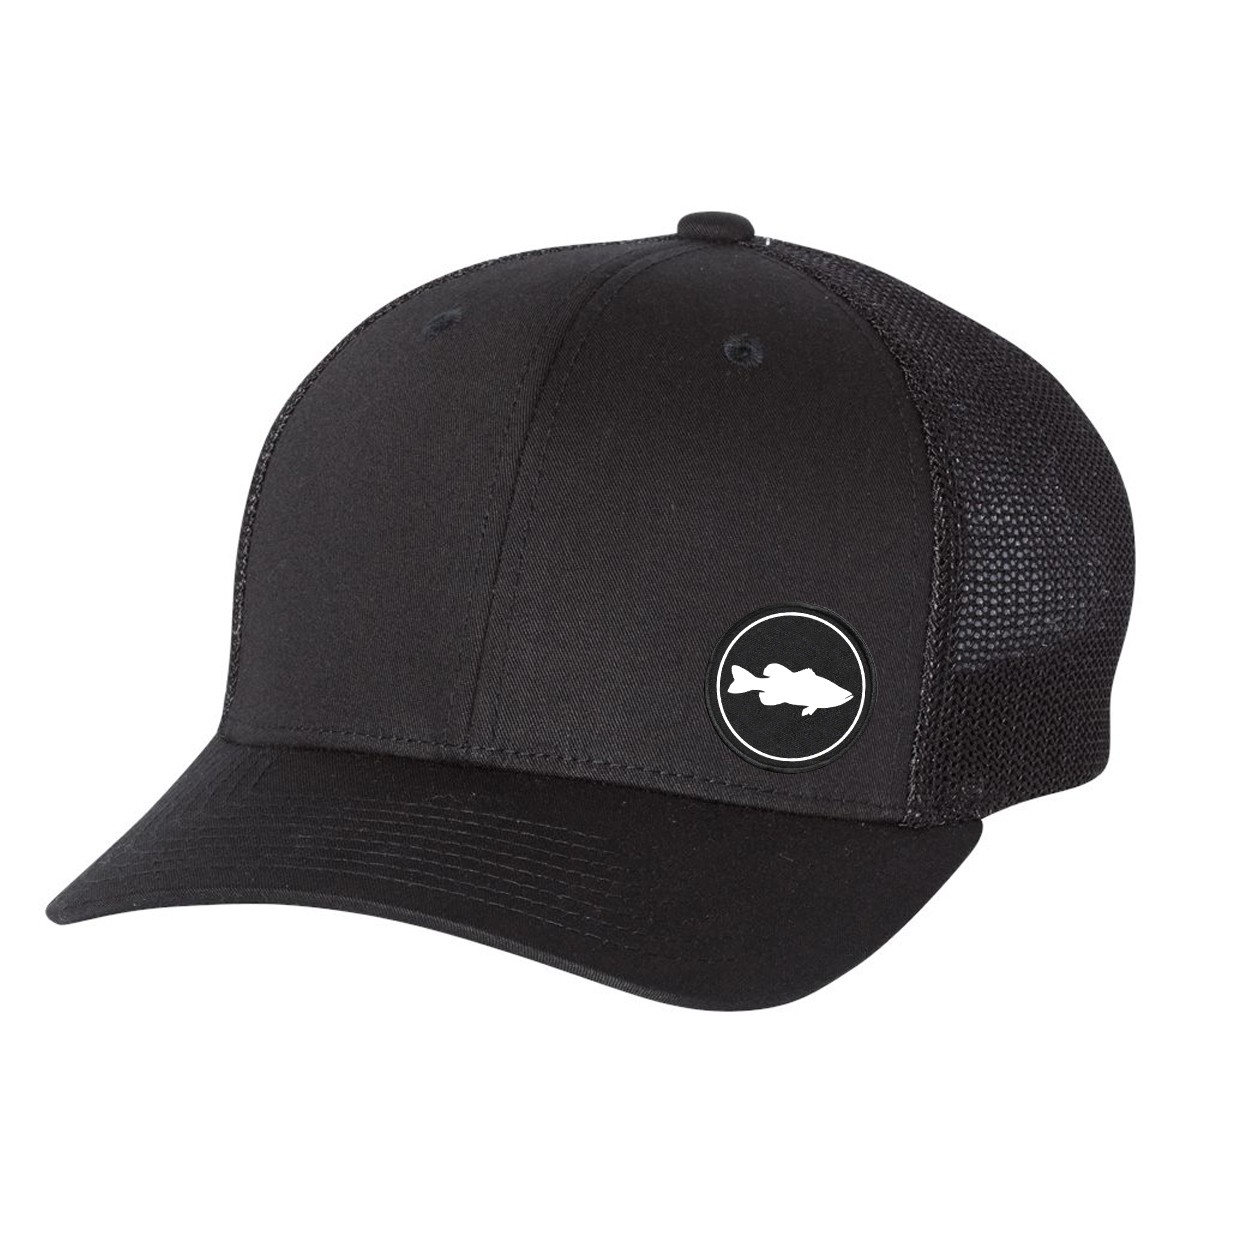 https://lifebrand.co/wp-content/blogs.dir/147/files/2021/06/fish-bass-icon-logo-night-out-woven-circle-patch-snapback-trucker-hat-black-white-logo-20220419230225.jpg